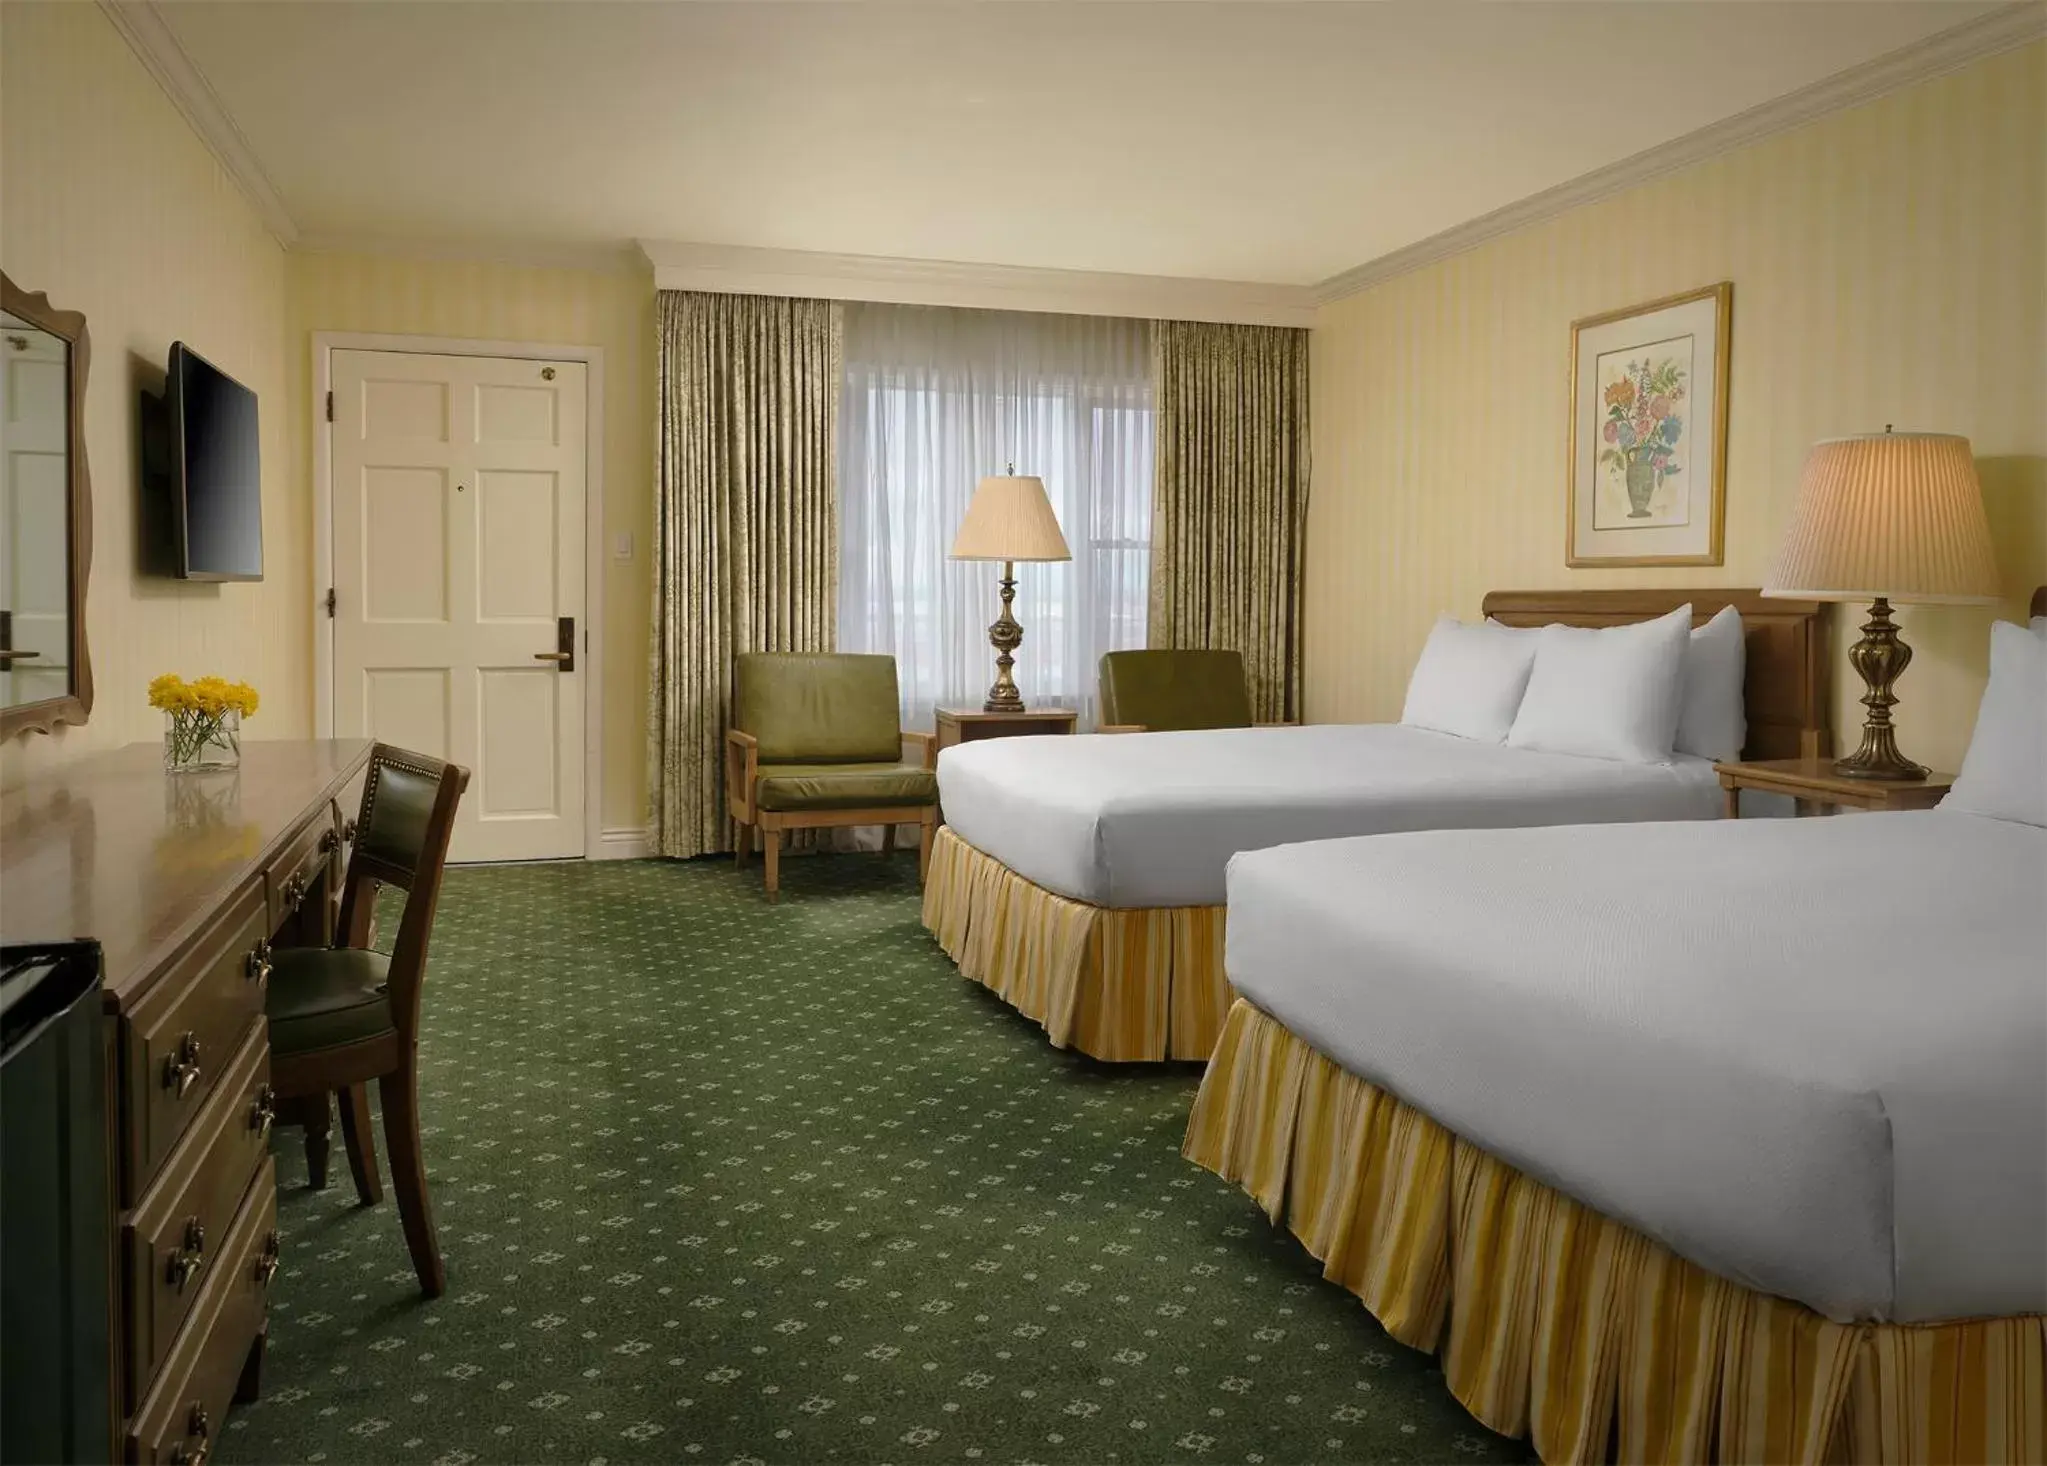 Bedroom in Little America Hotel - Wyoming